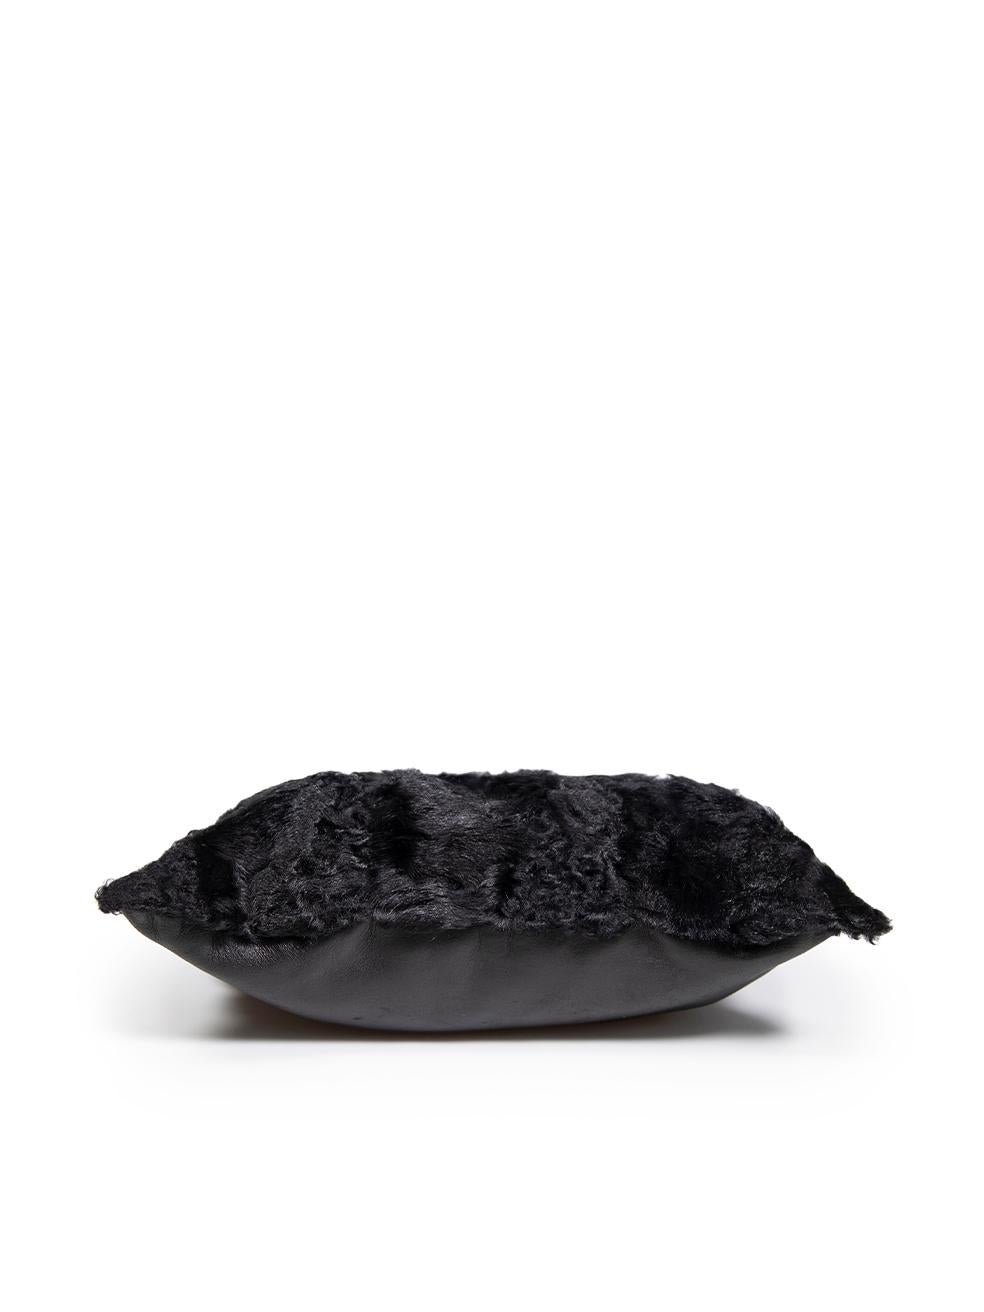 Women's Loewe Black Fur Panel Tote Bag For Sale